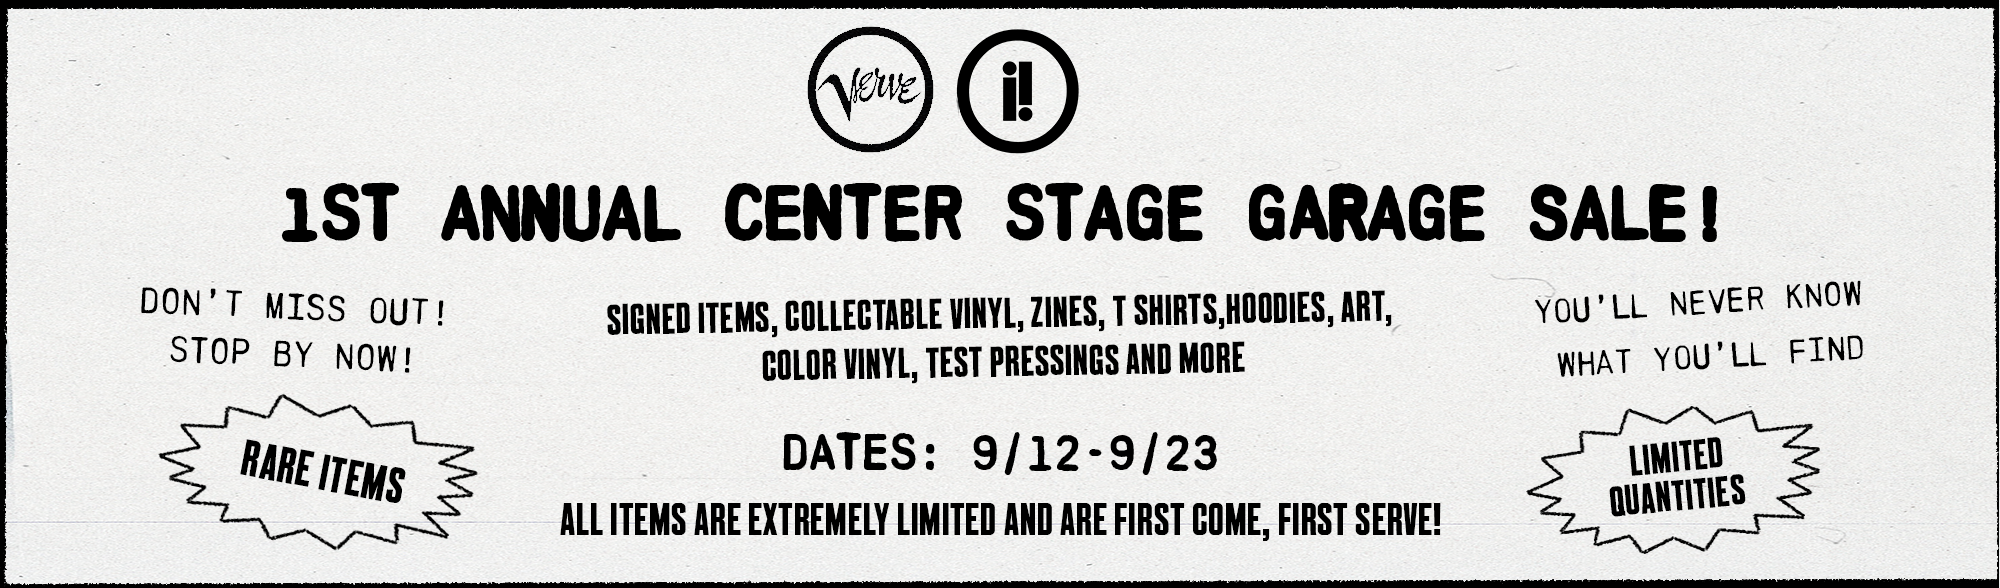 Verve Center Stage Store